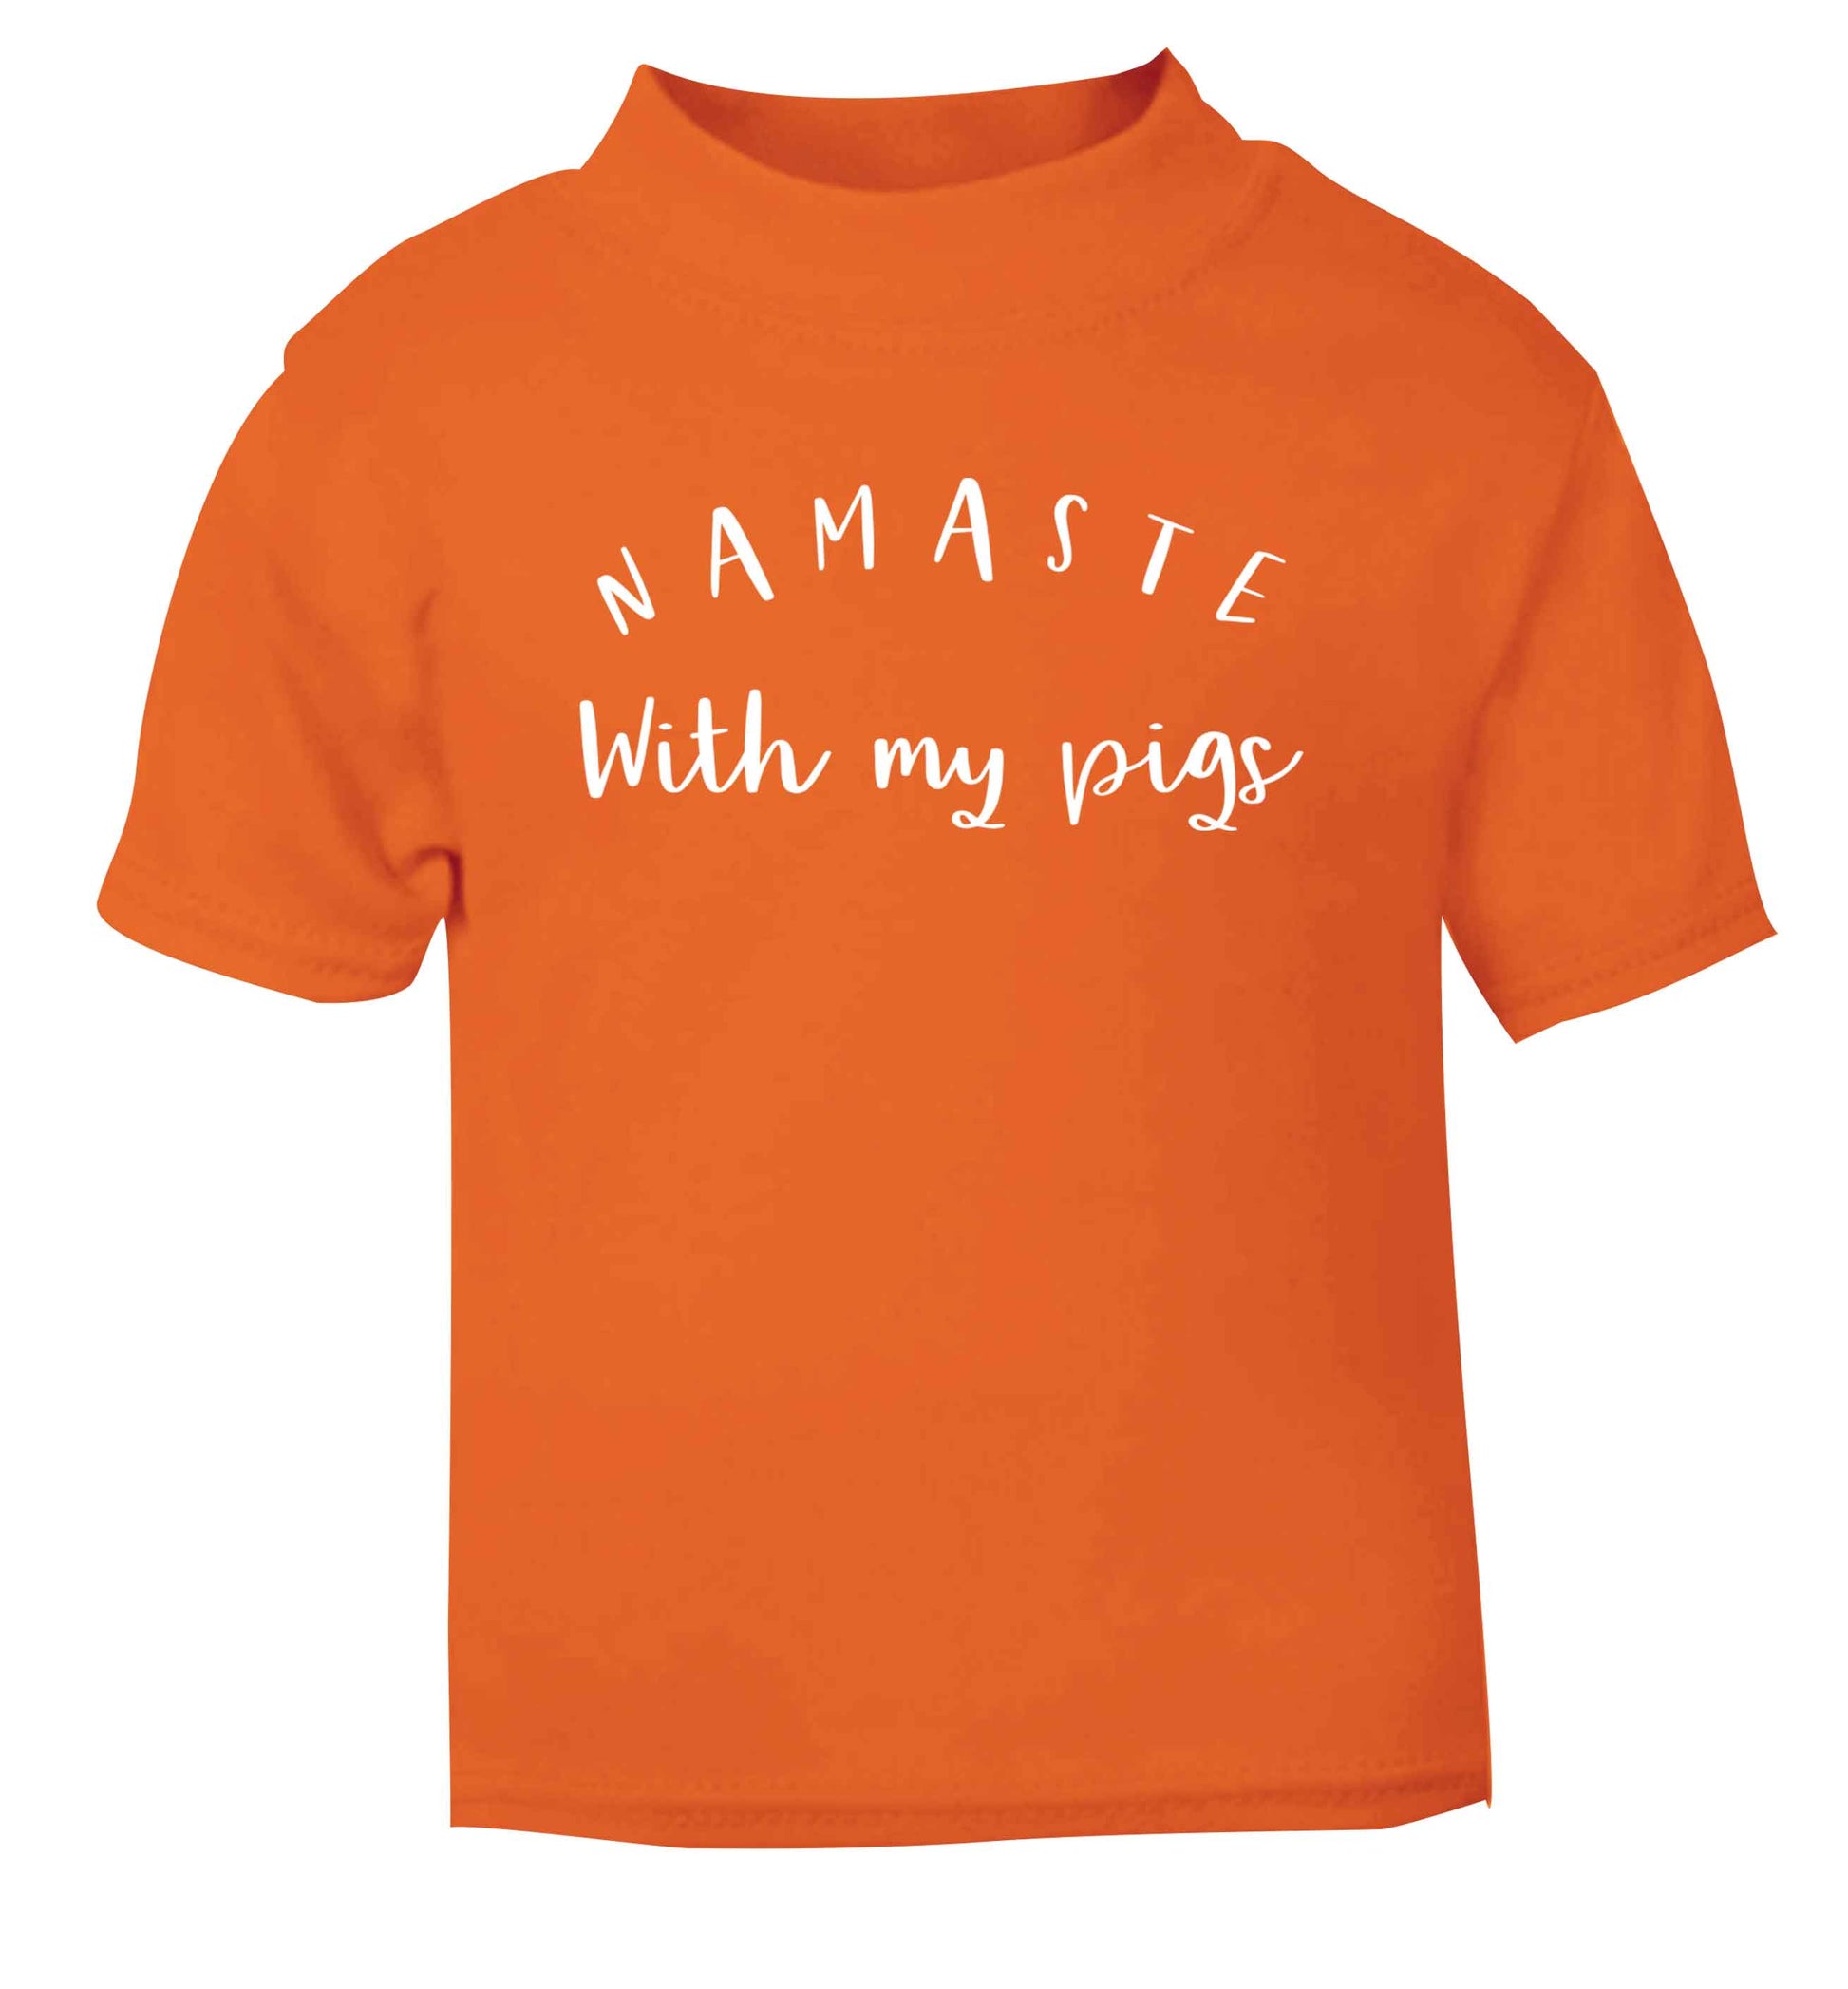 Namaste with my pigs orange Baby Toddler Tshirt 2 Years